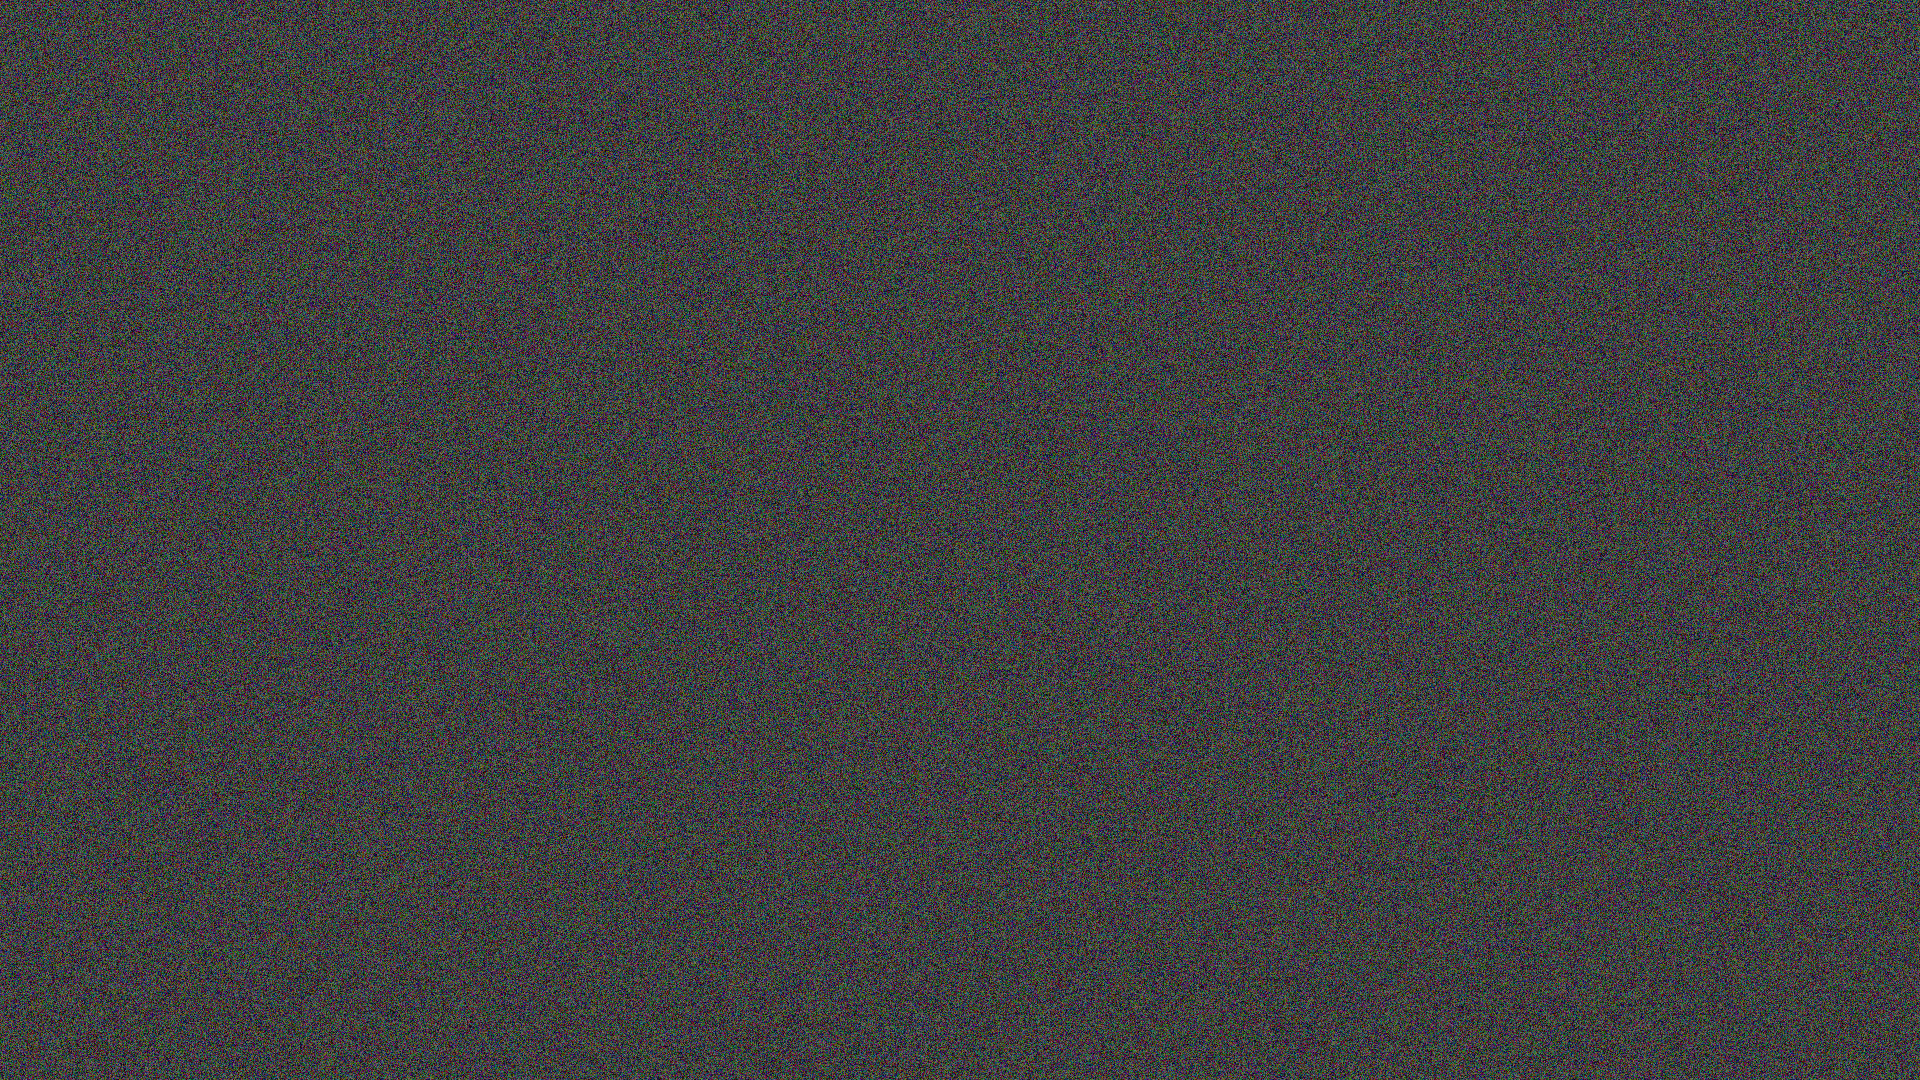 General 1920x1080 dark pixels noise simple background minimalism